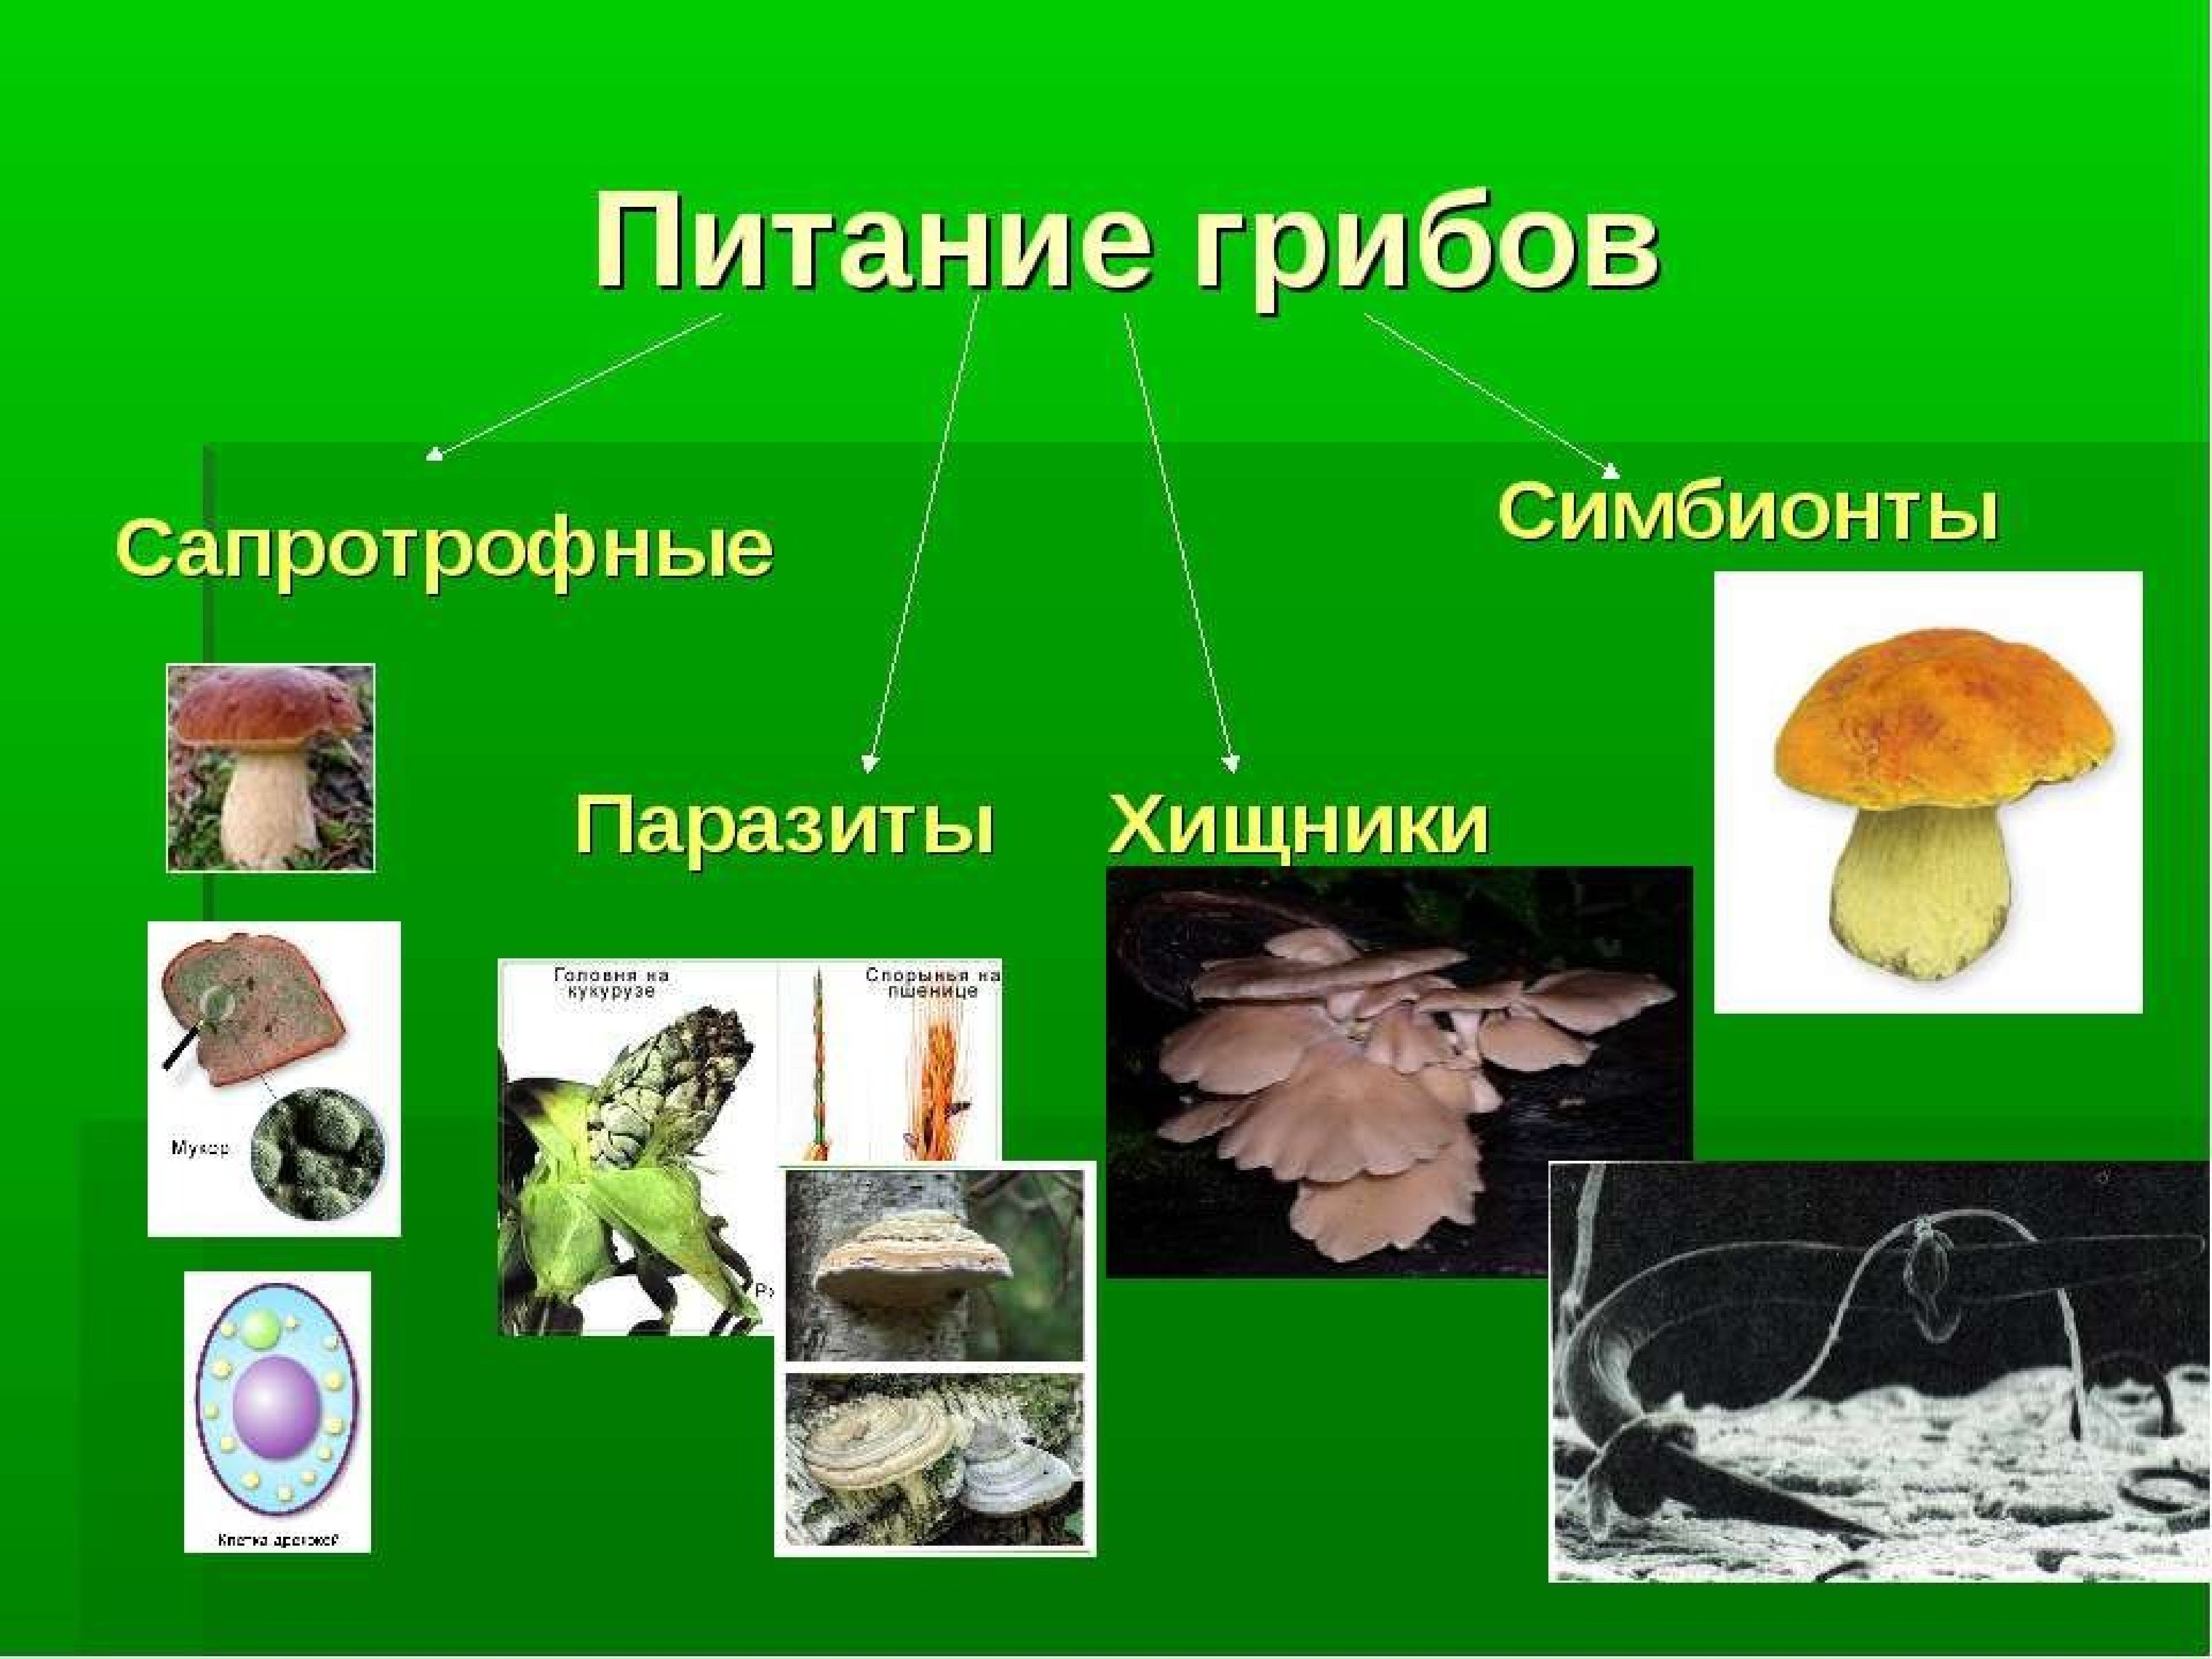 Какой тип питания характерен для гребенчатого. Типы питания грибов сапротрофы паразиты симбионты и хищники. Типы питания грибов 5 класс биология. Схема питания грибов 6 класс. Питание грибов 5 класс.